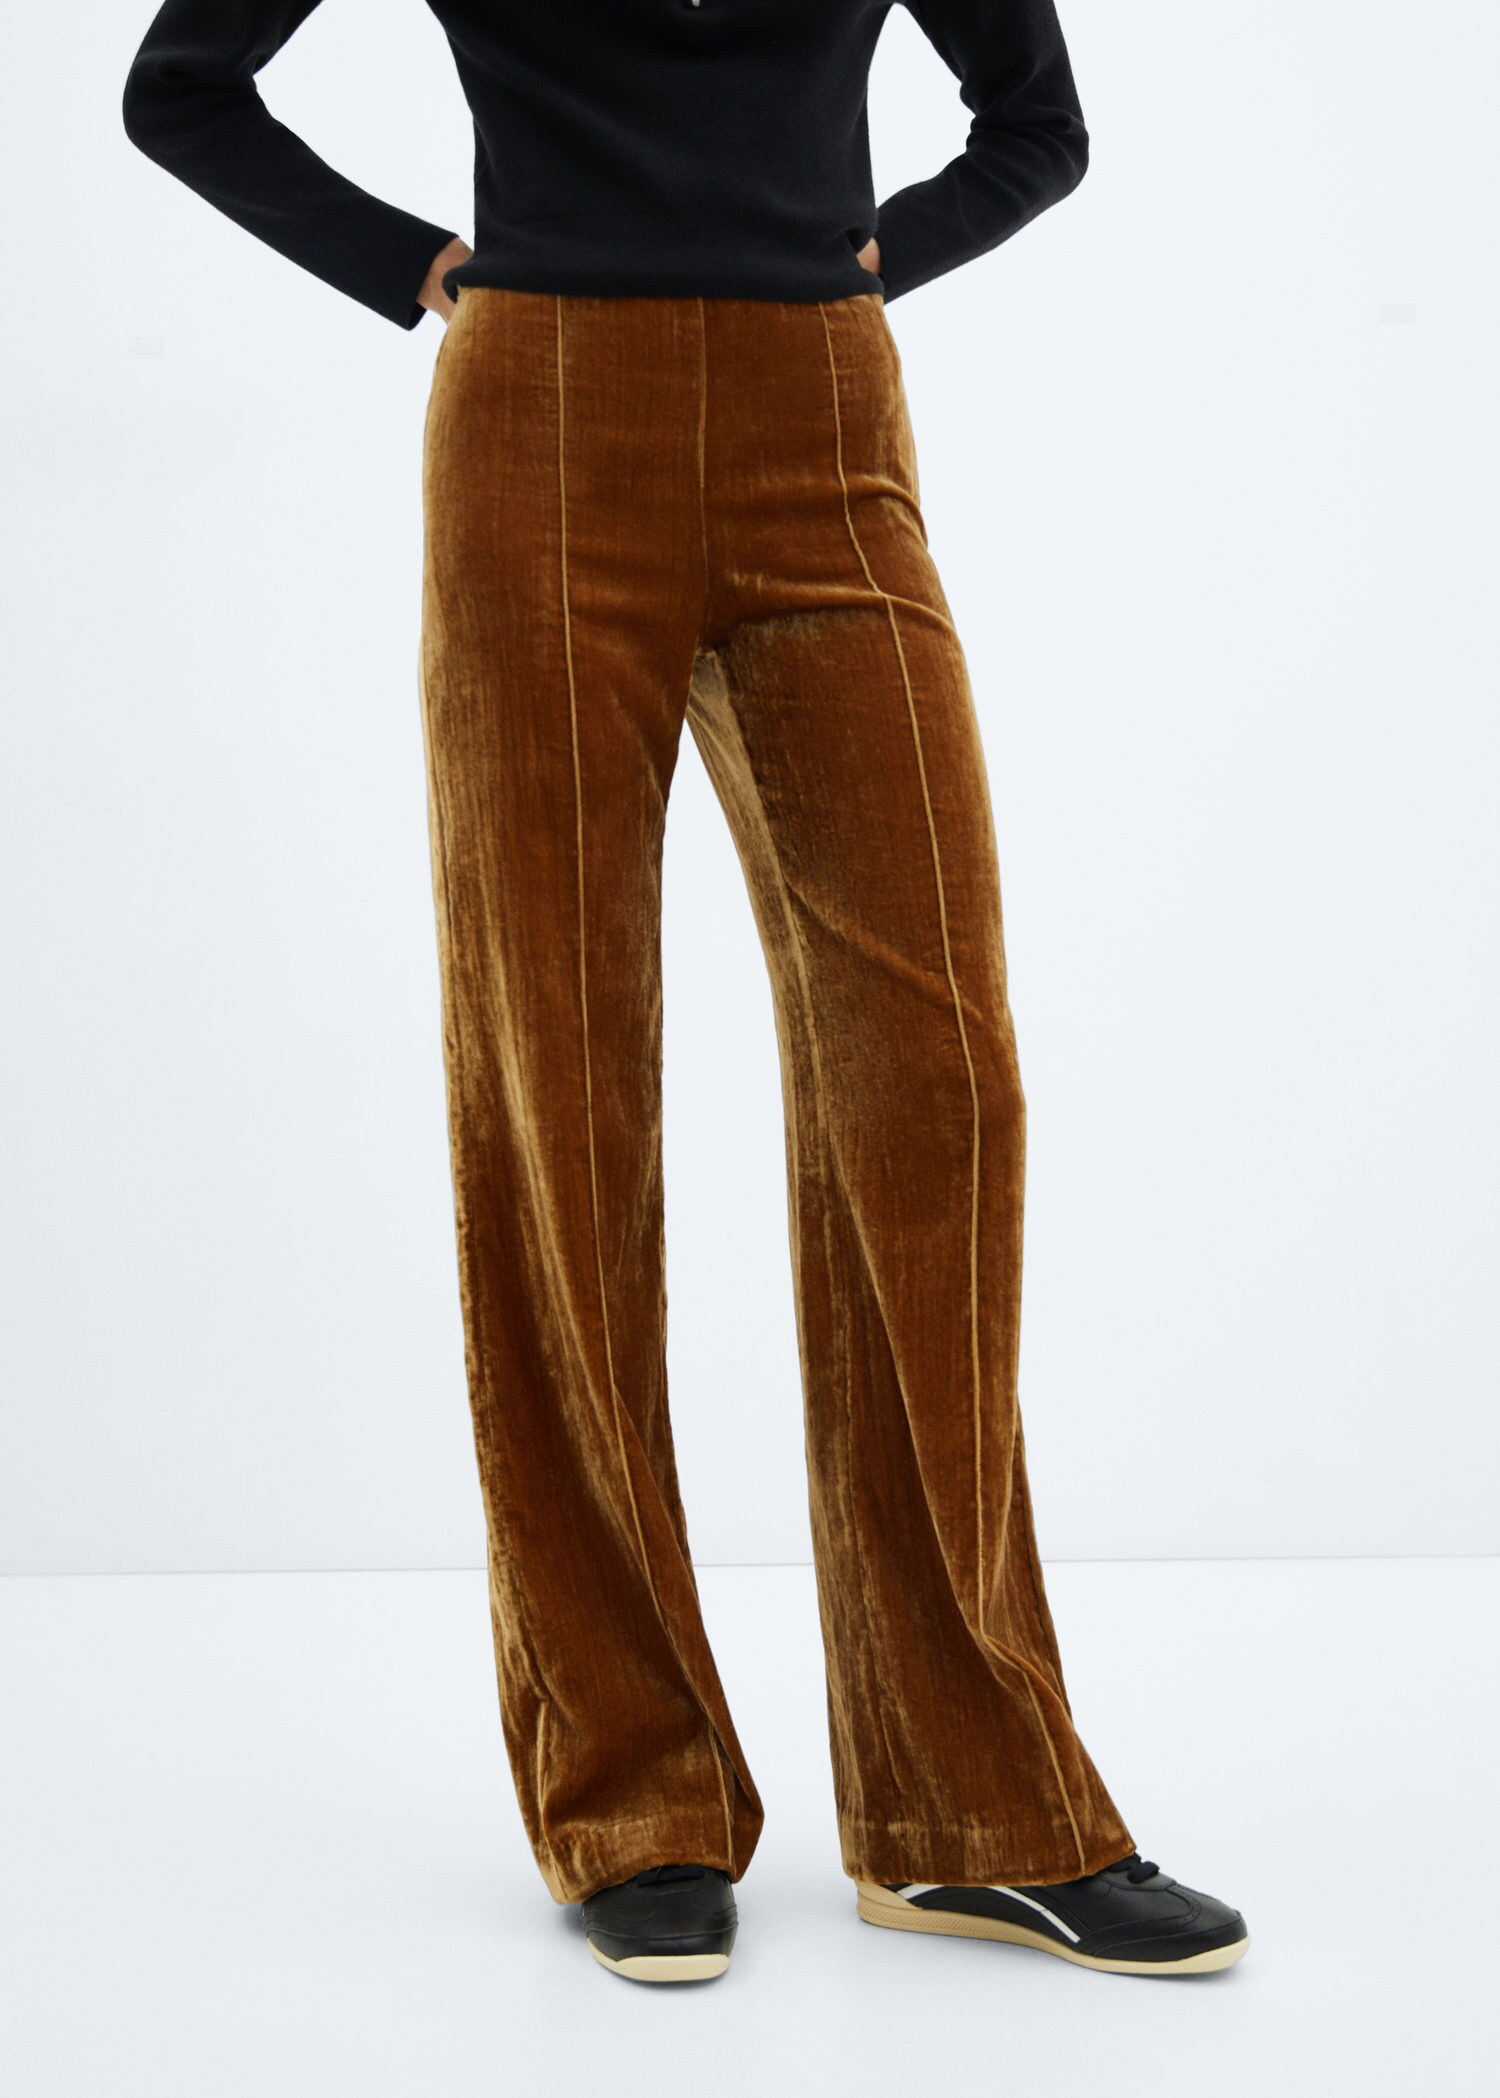 LTS Womens Tall Slim Leg Velvet Purple Trousers | Long Tall Sally